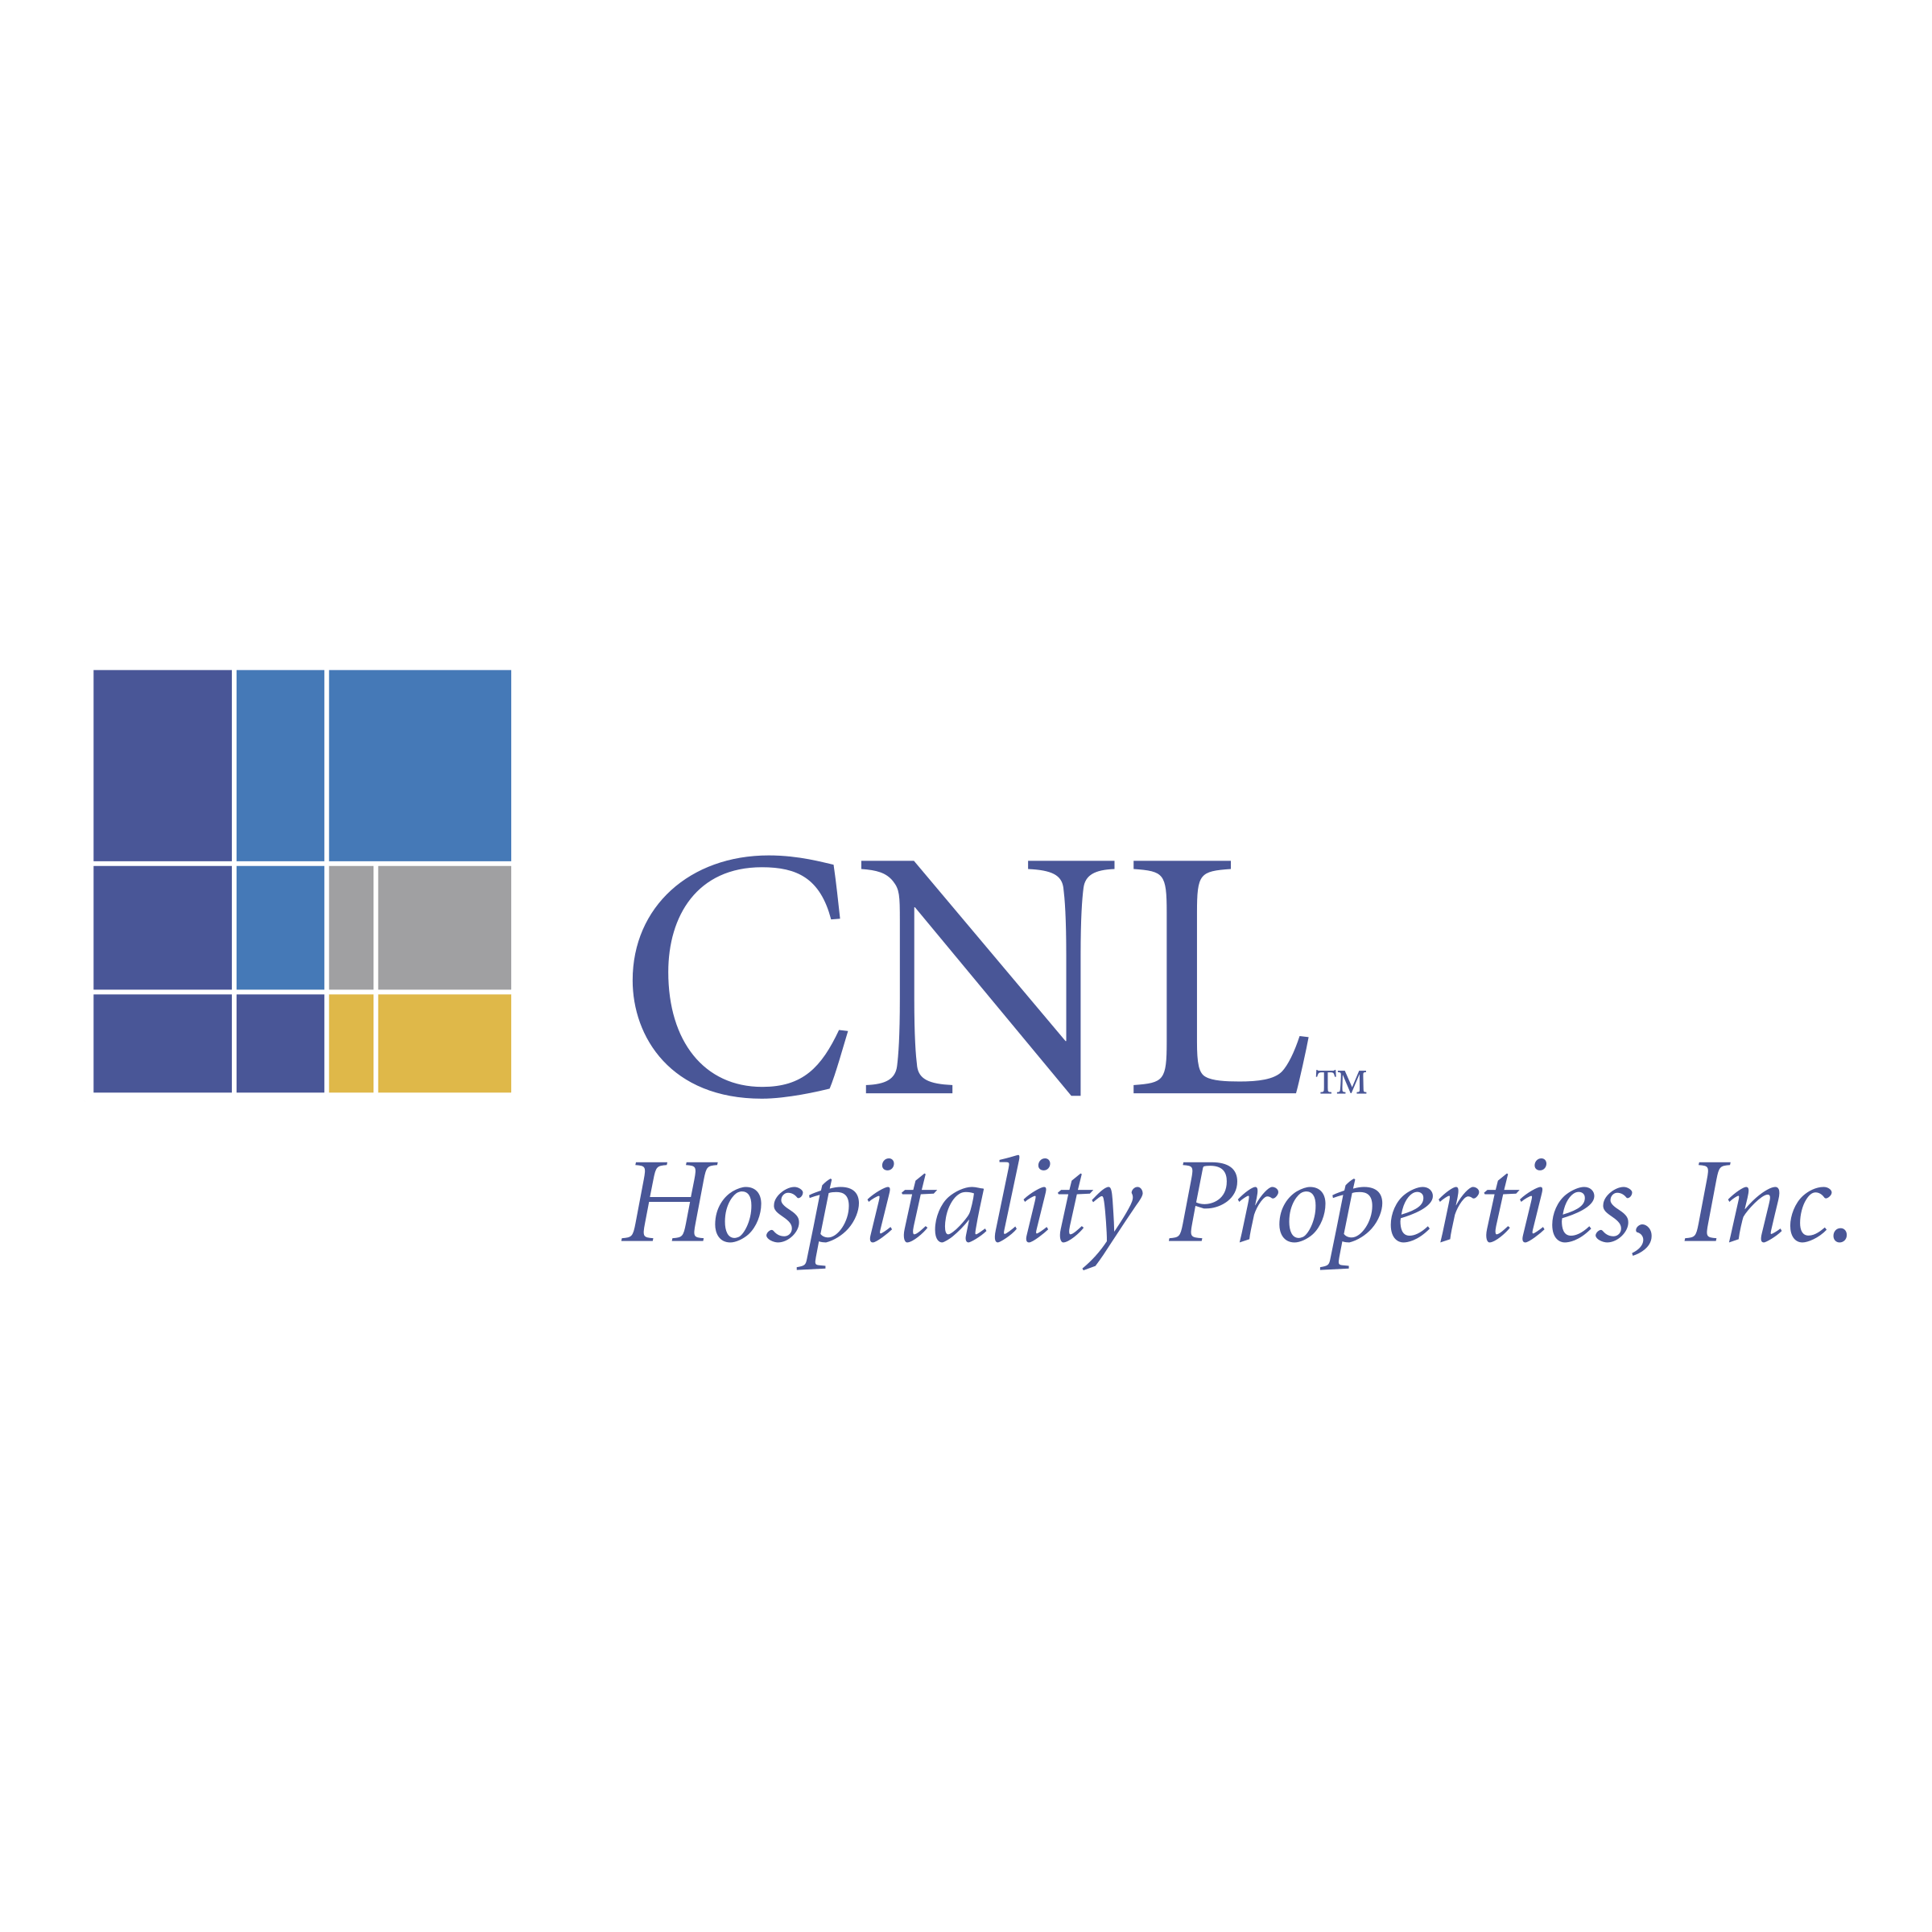 CNL Logo - CNL Hospitality Properties Logo PNG Transparent & SVG Vector